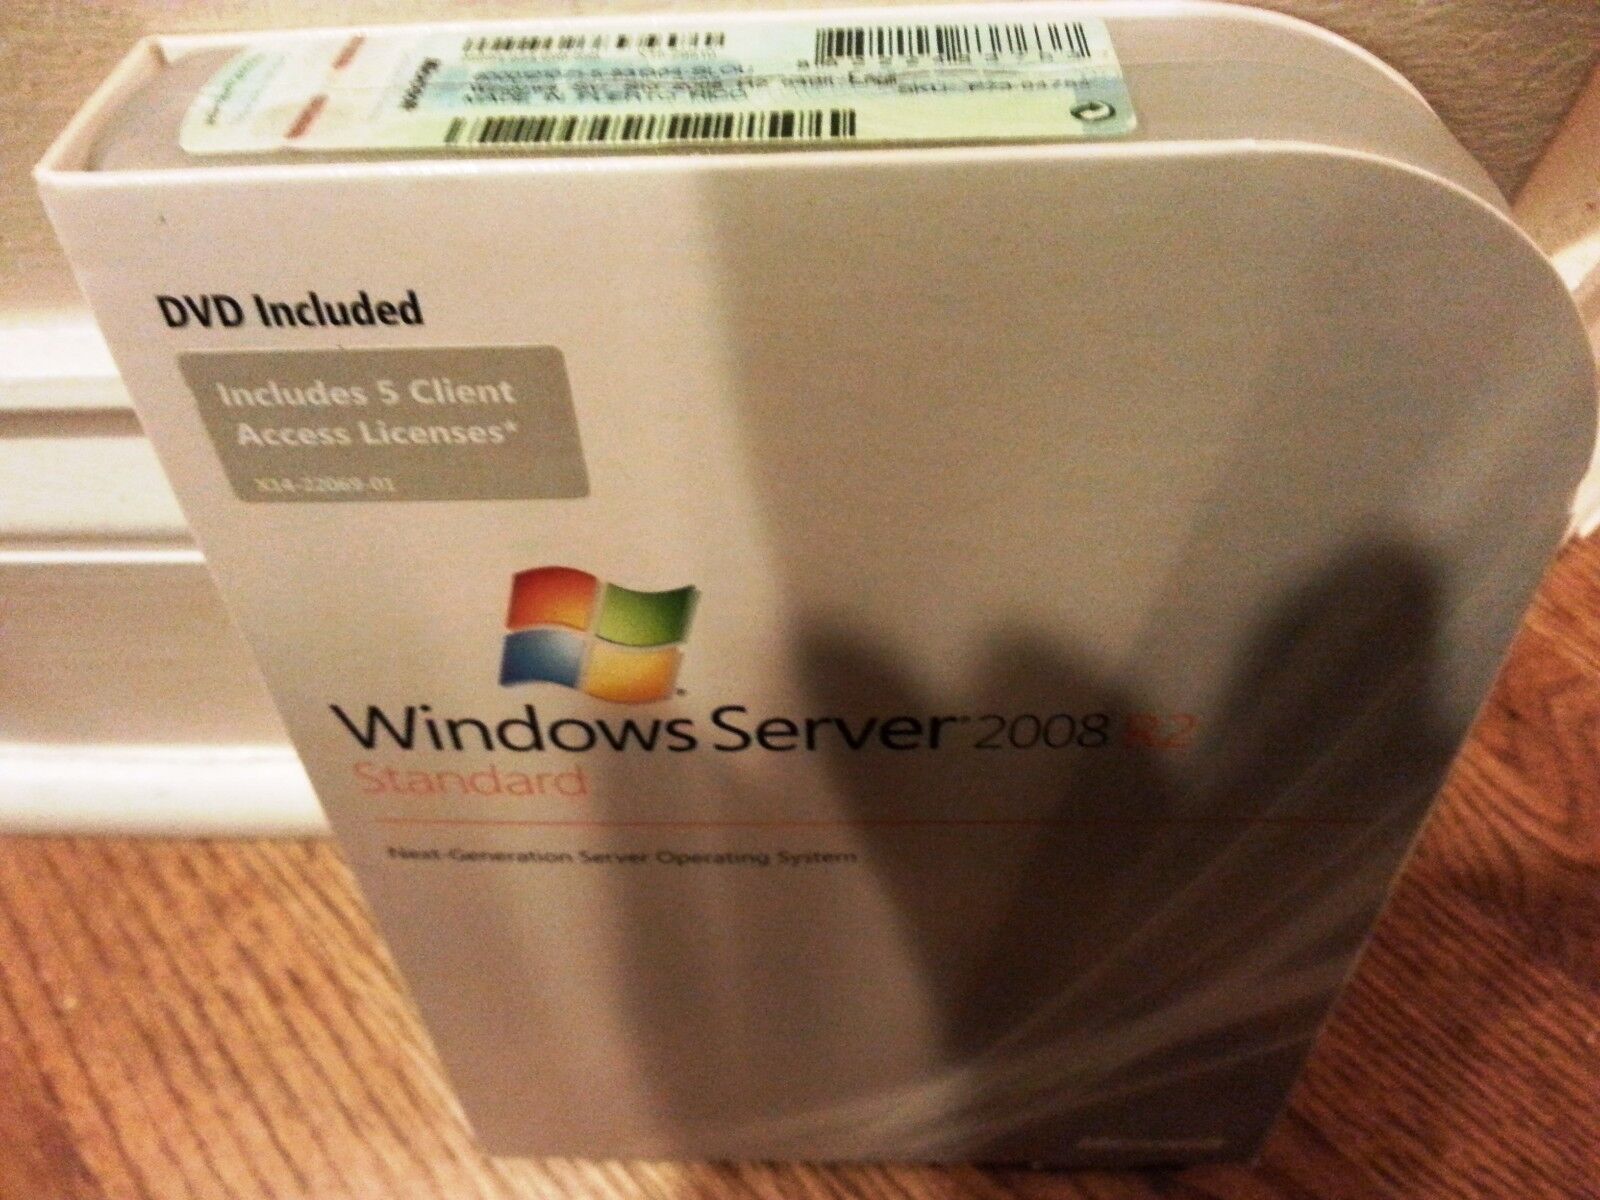 Microsoft Windows Server 2008 R2 Standard,SKU P73-04754,64-Bit,Full Retail,5 CAL